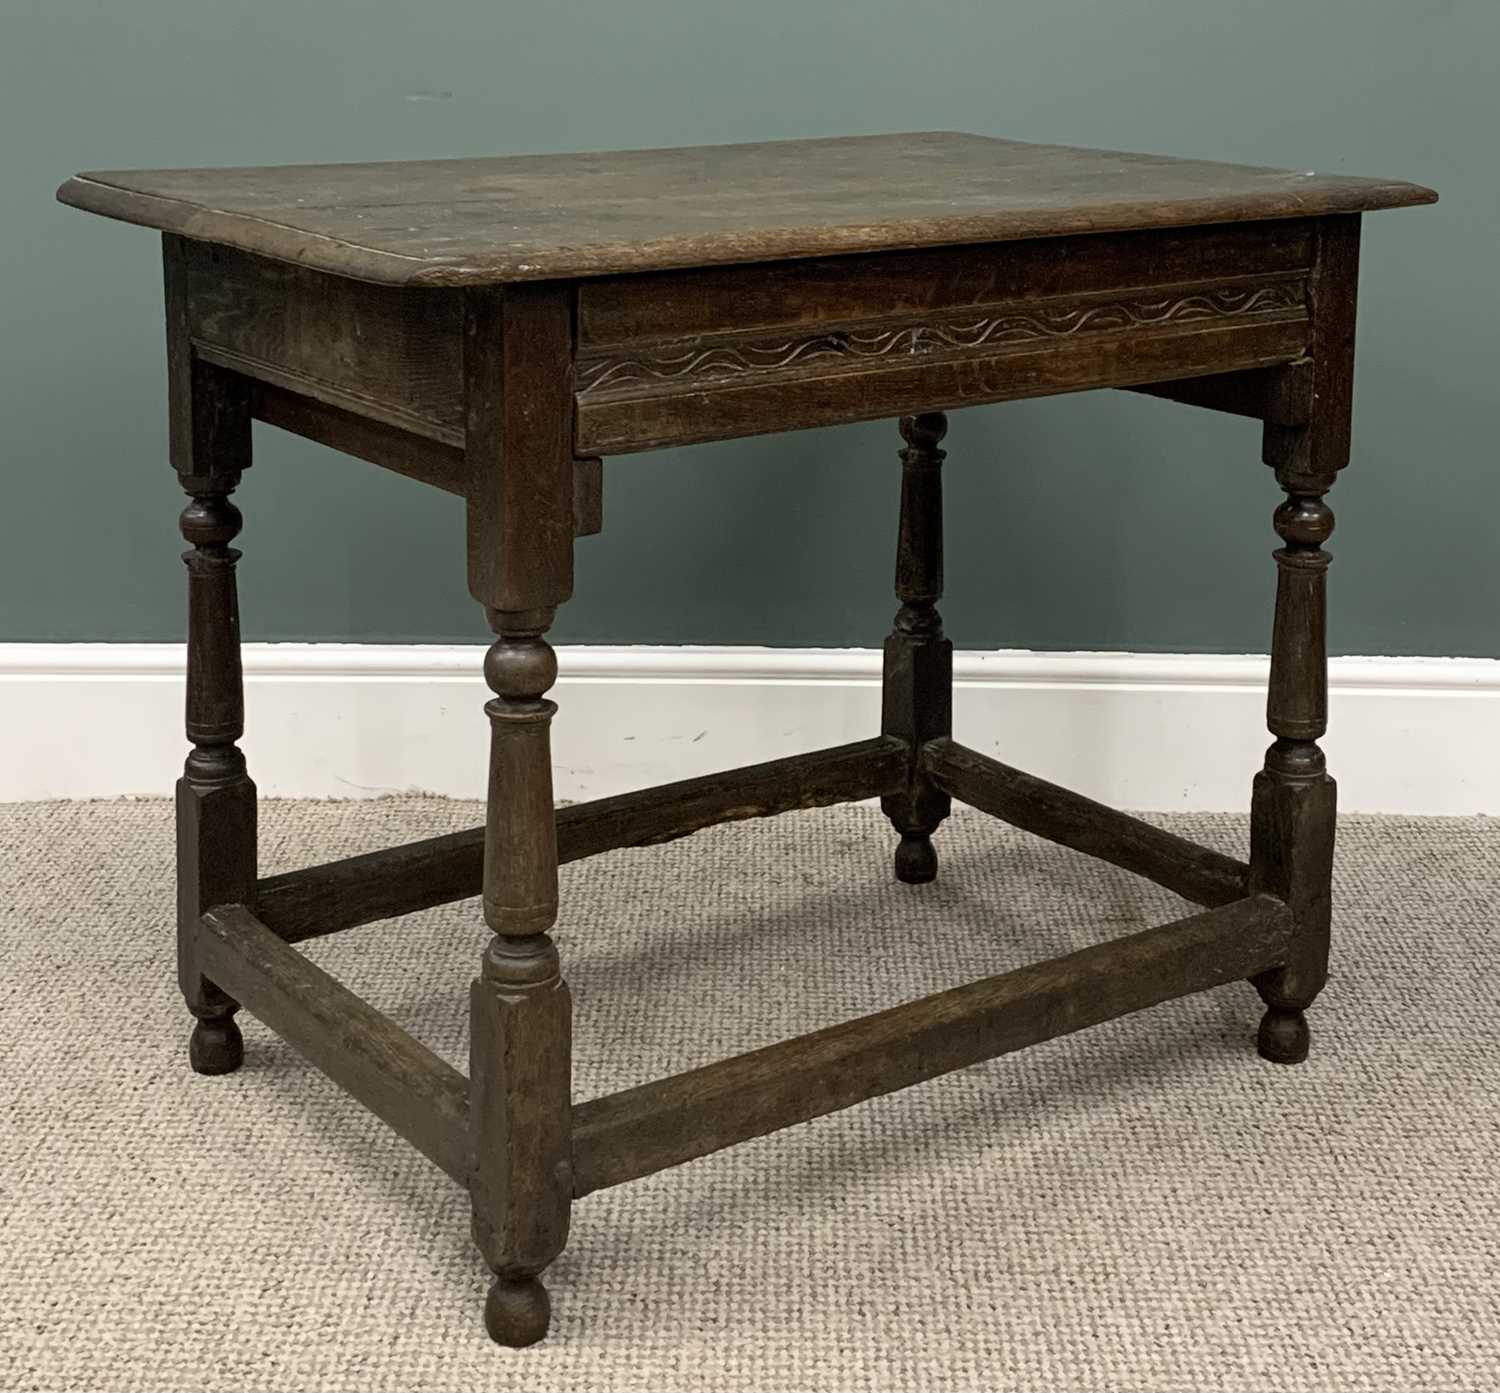 ANTIQUE OAK SINGLE DRAWER TABLE circa 1800, planked top, moulded edge, carved drawer front, peg - Image 3 of 4